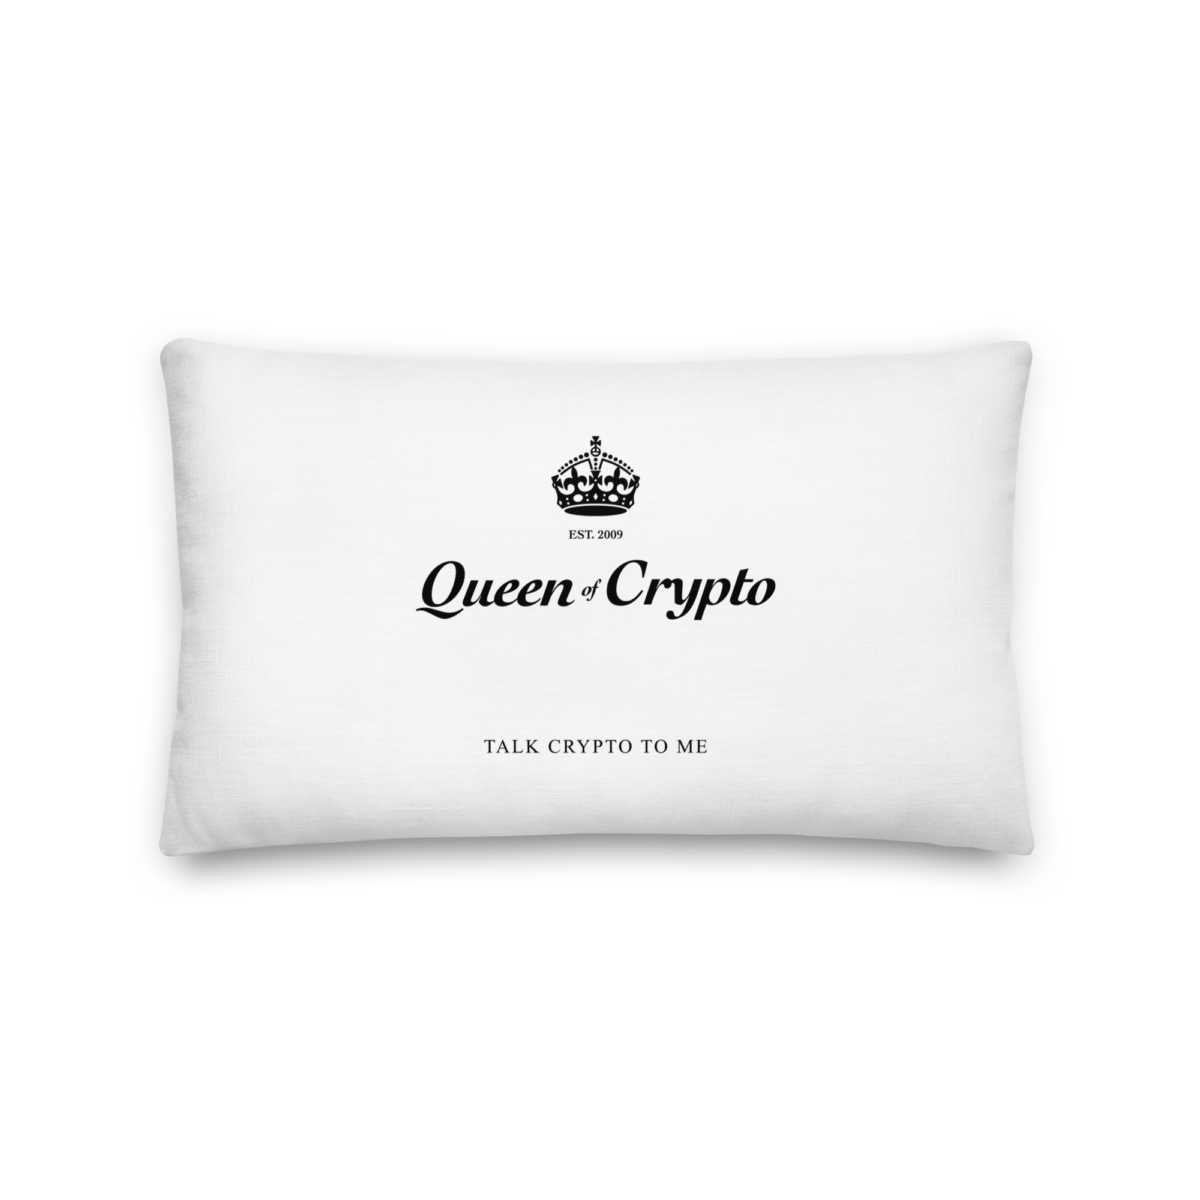 all over print premium pillow 20x12 front 633e0fc0161e6 - Queen of Crypto Premium Pillow